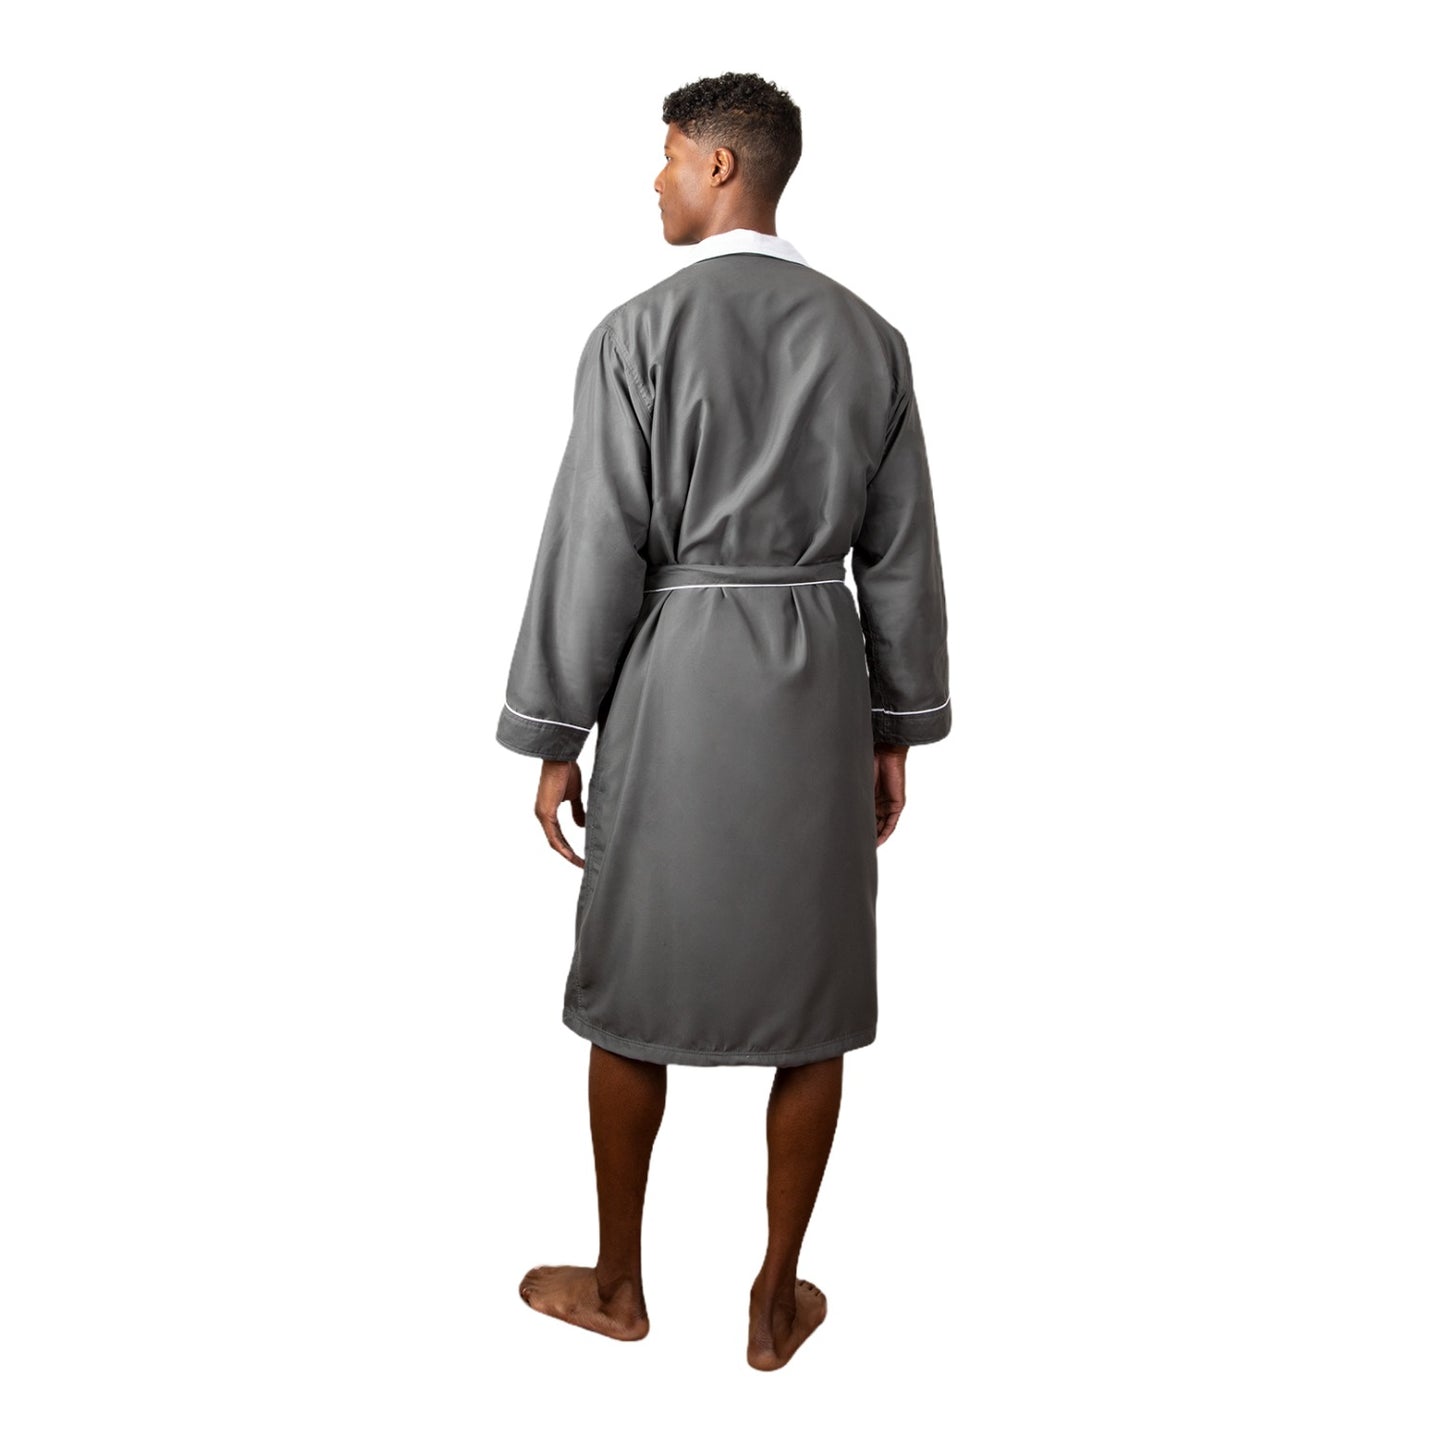 Spa Robe for Men